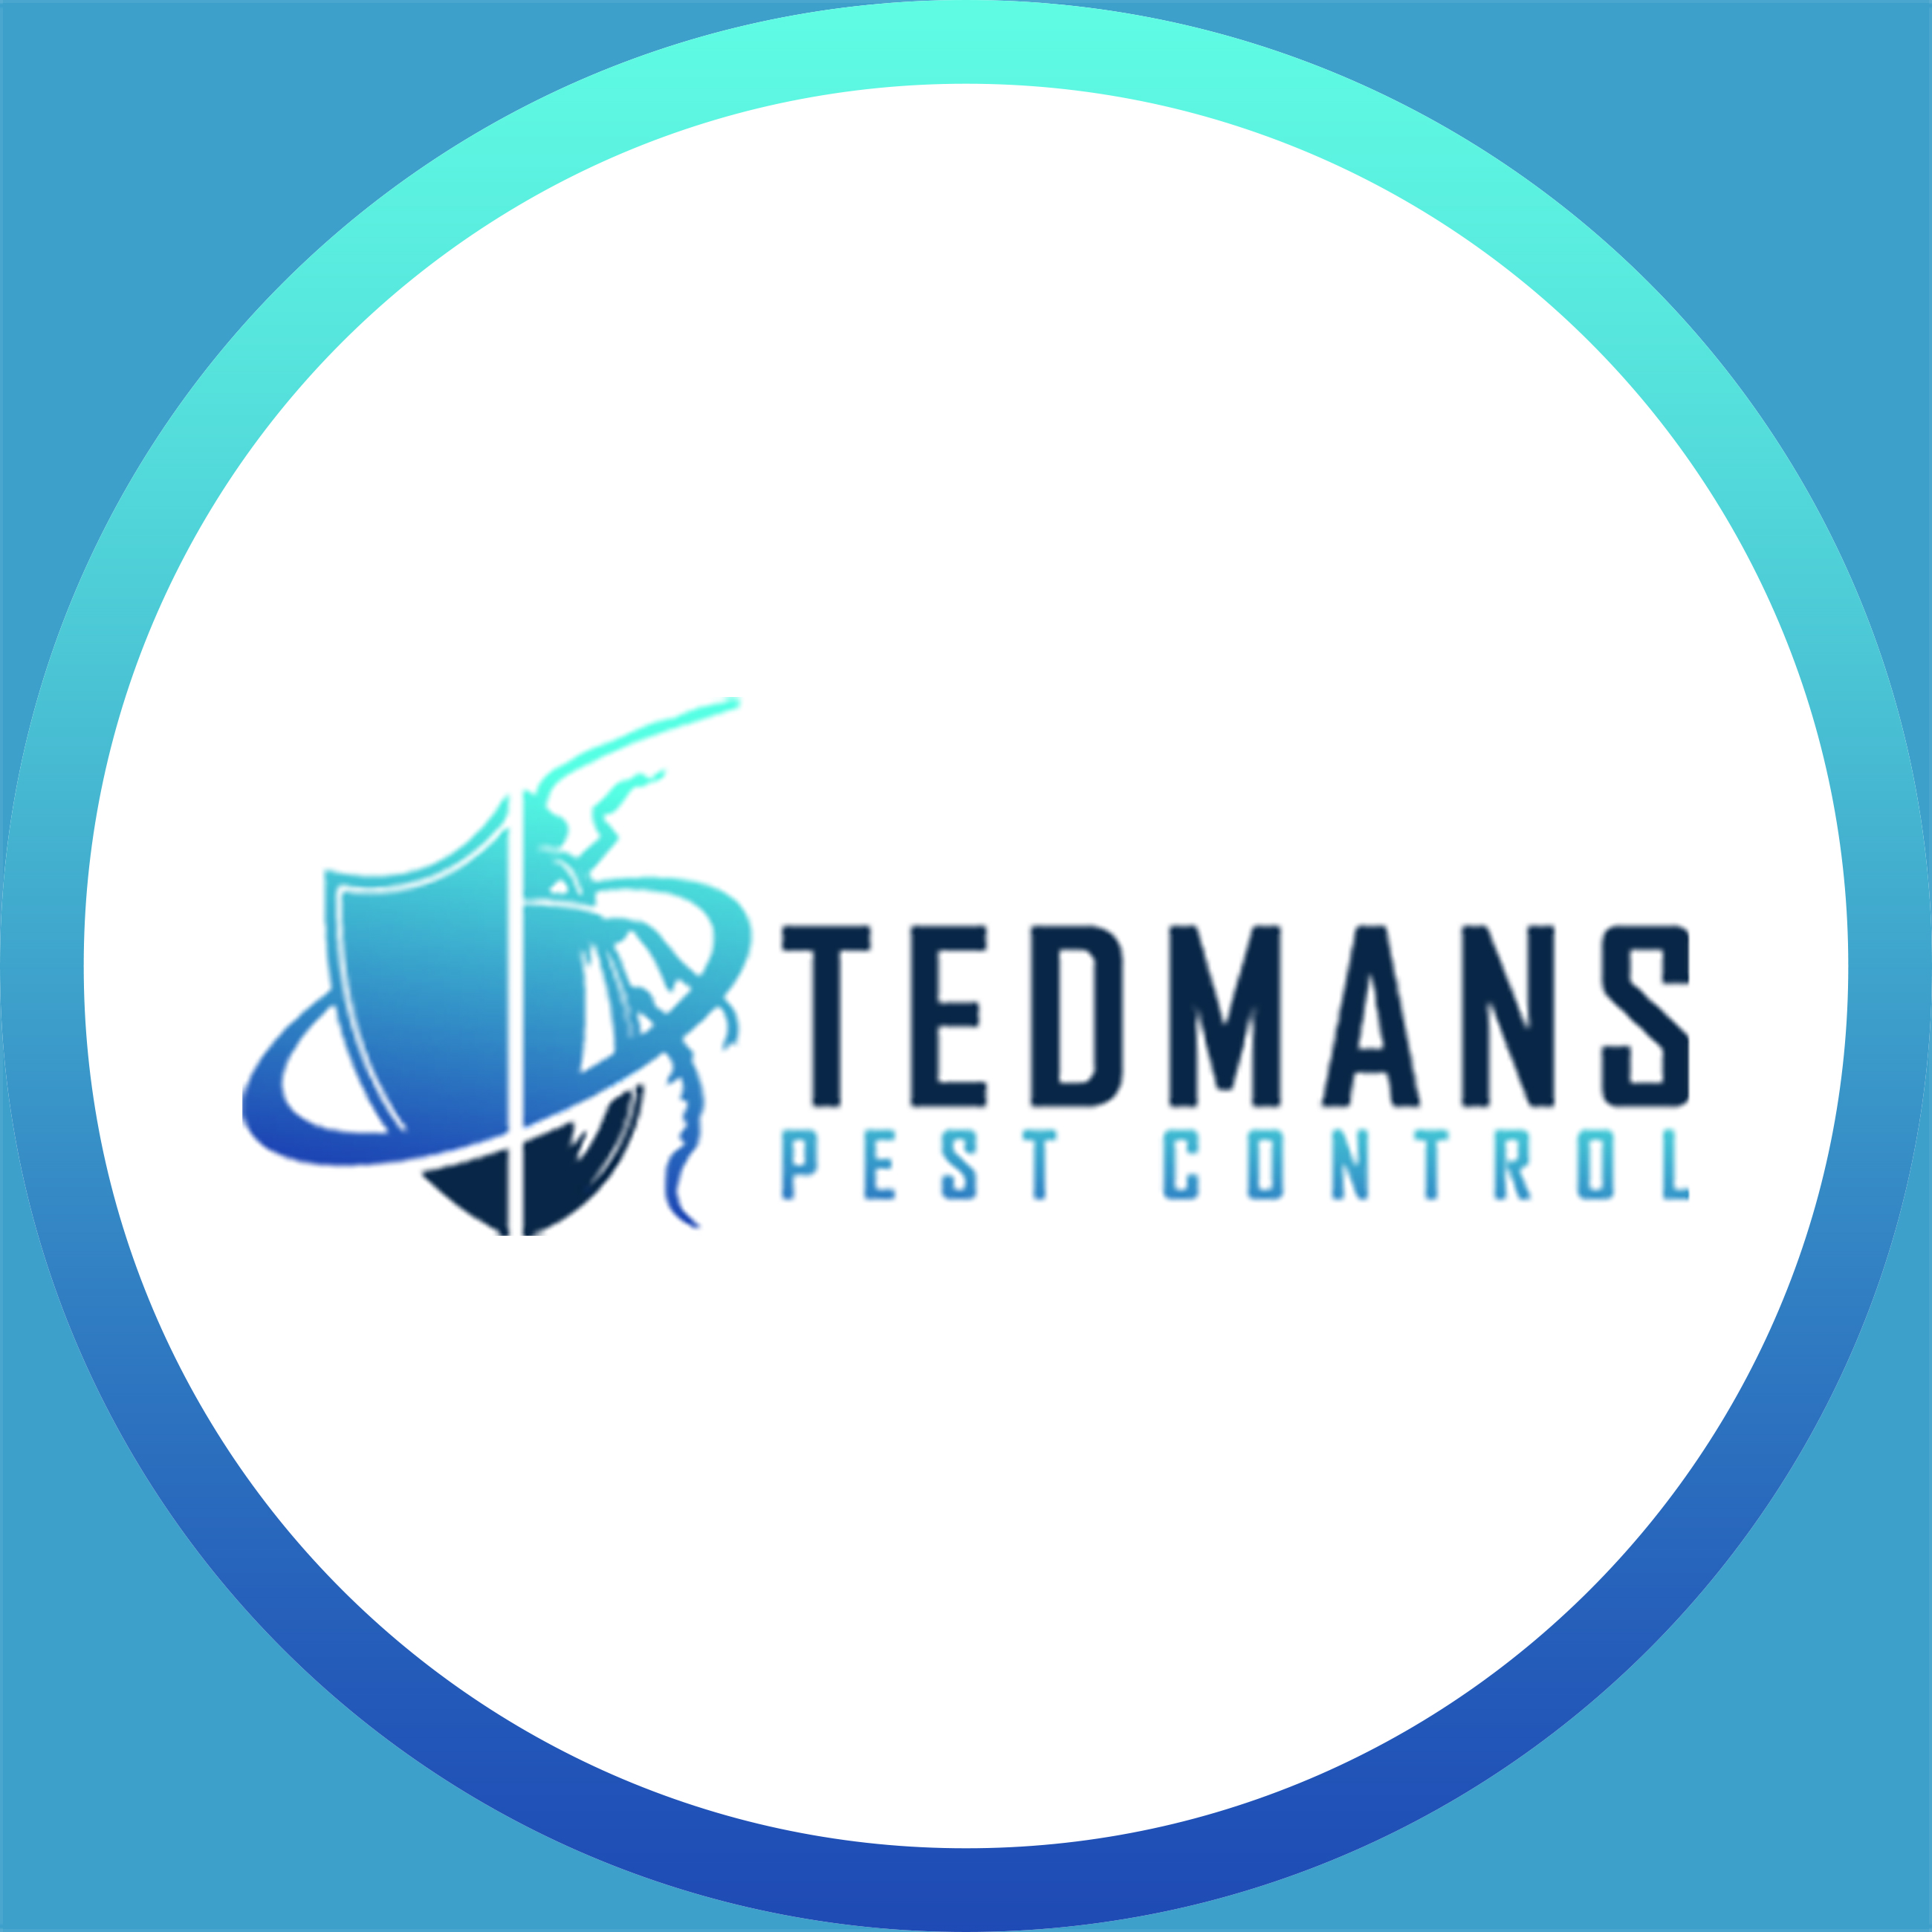 Images Tedmans Pest Control